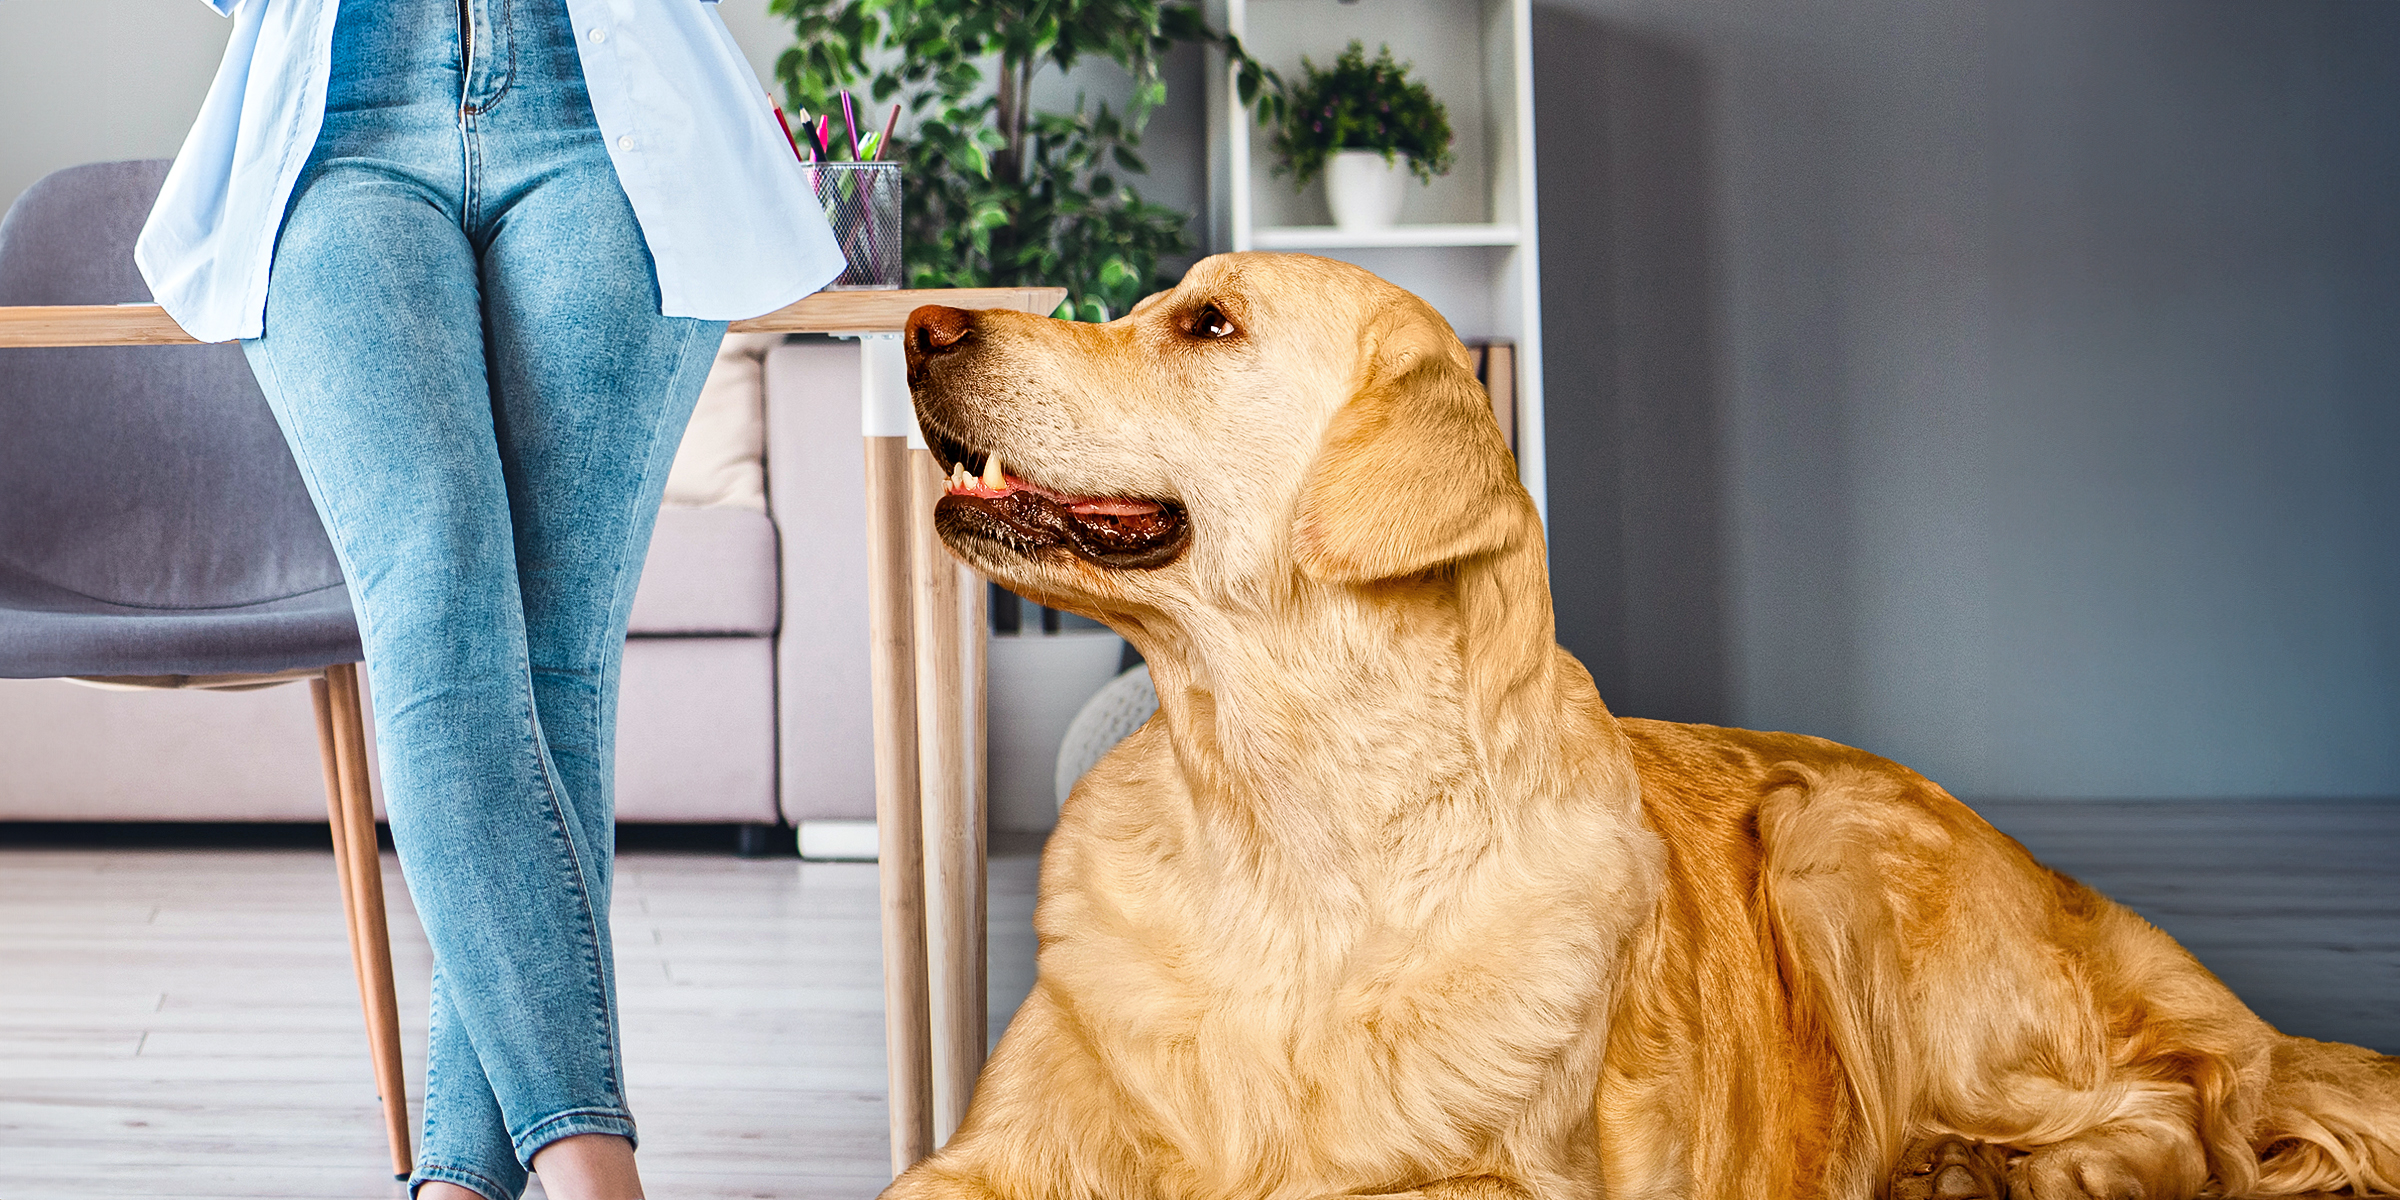 A dog sitting near a woman wearing jeans | Source: Shutterstock